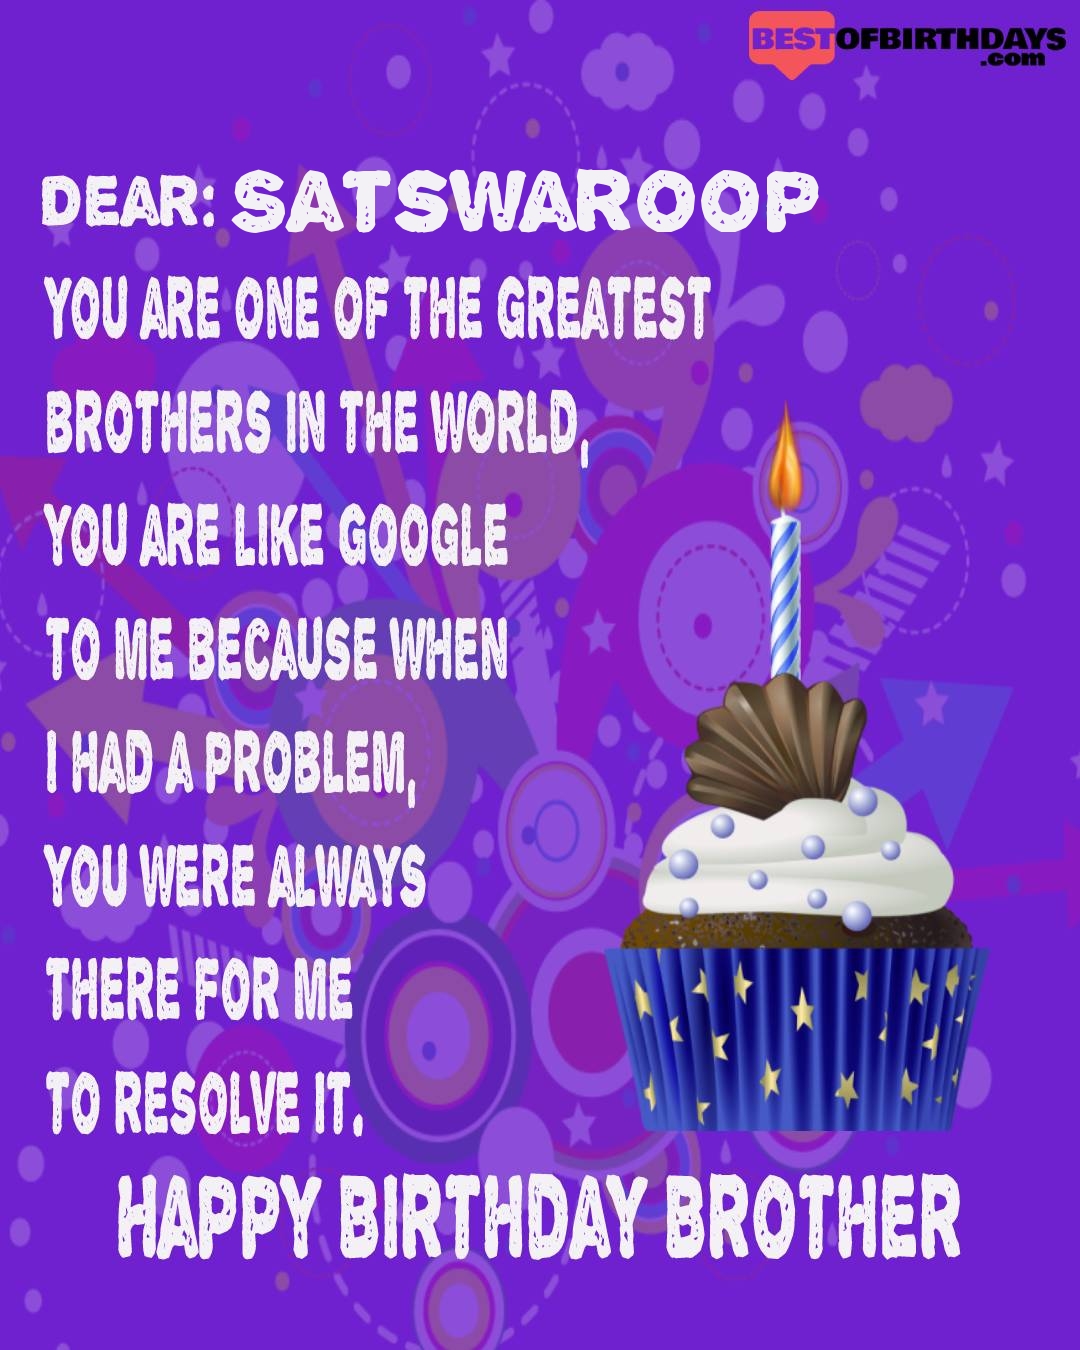 Happy birthday satswaroop bhai brother bro